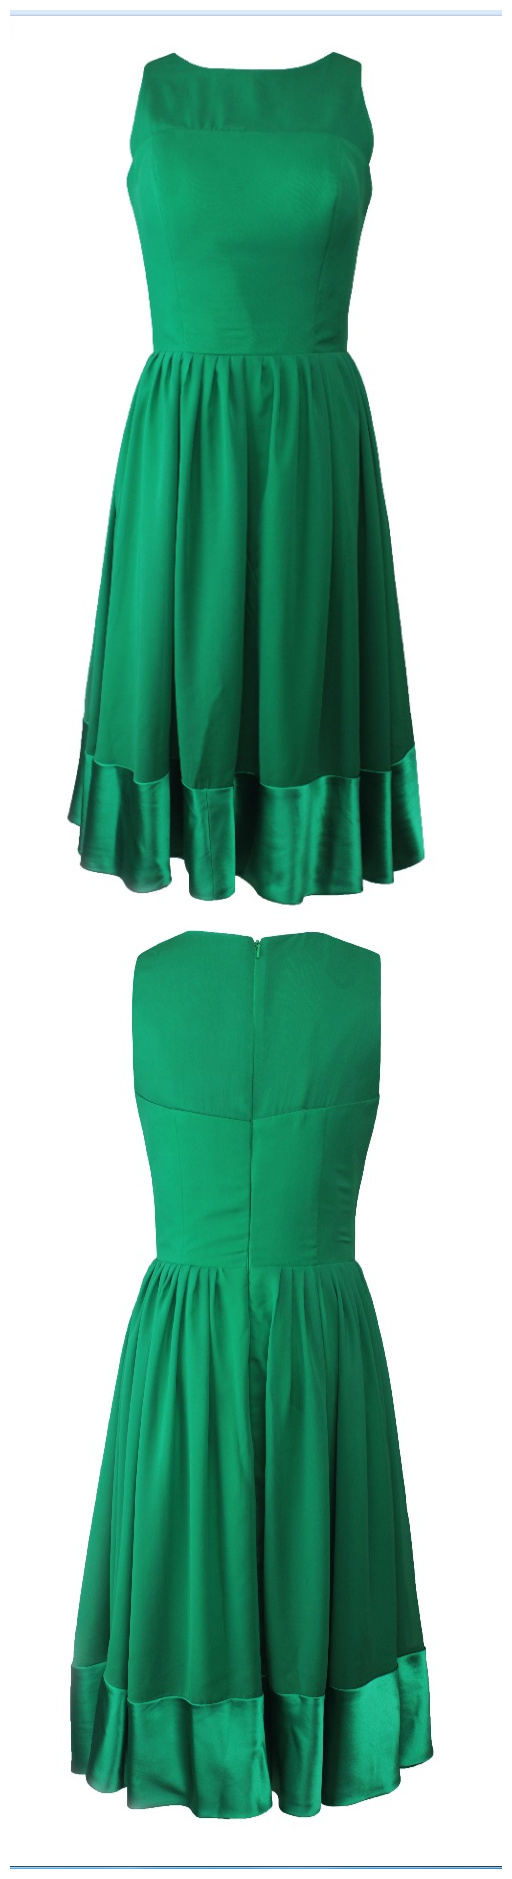 Green Chiffon Short Evening Dresses, Vestido De Festa Lady Prom Gown